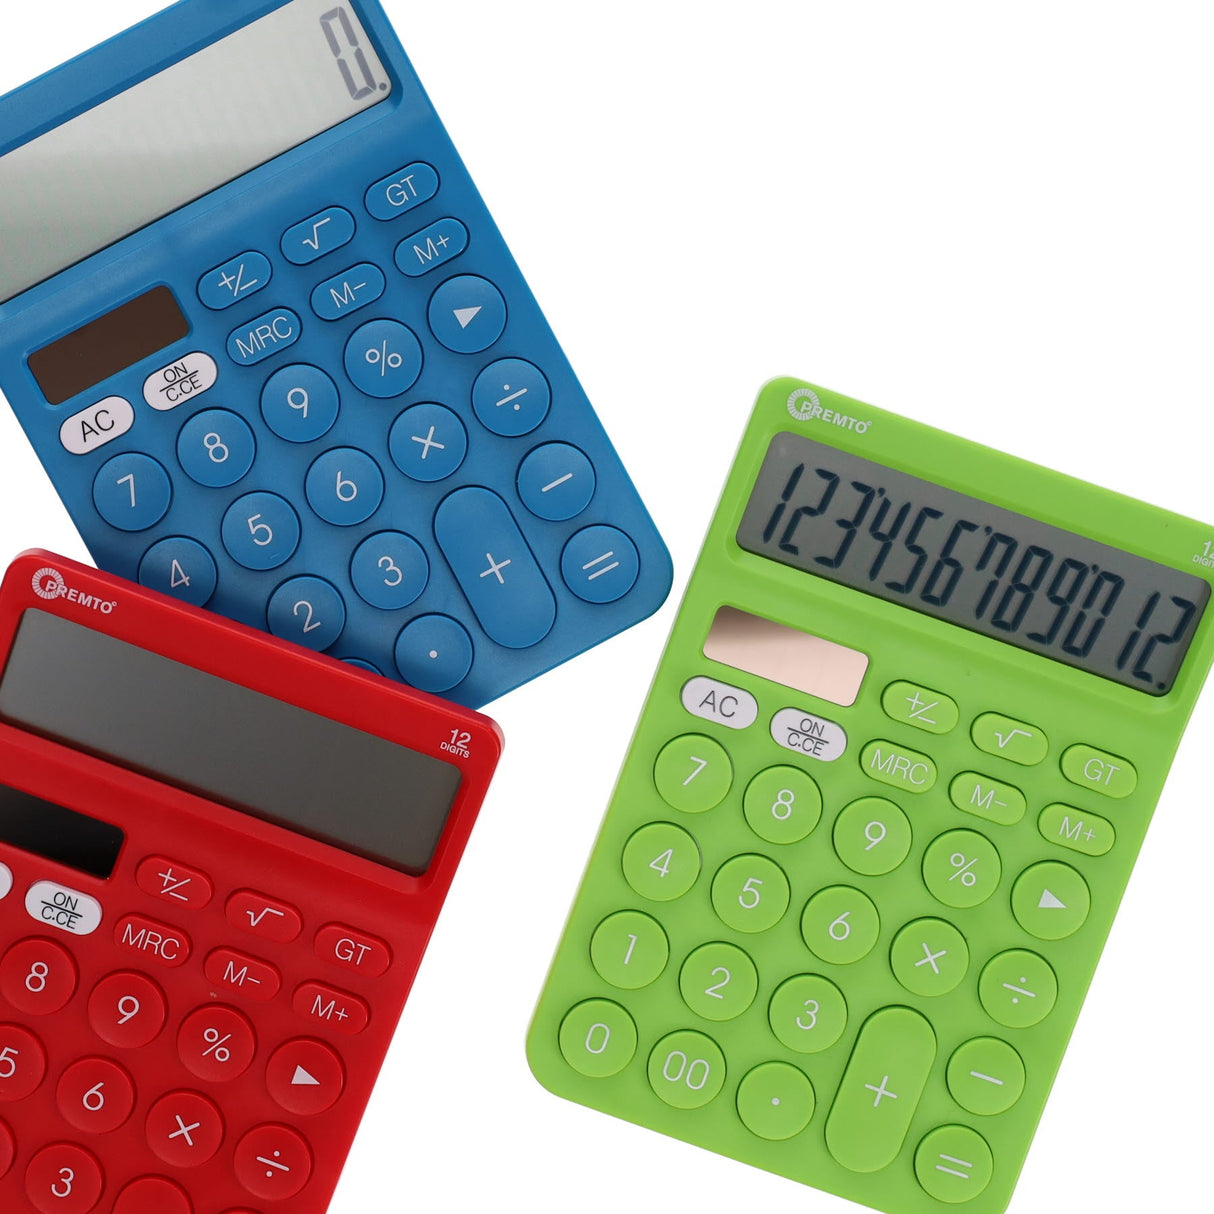 Premto Desktop Calculator Maths Essentials - Printer Blue | Stationery Shop UK